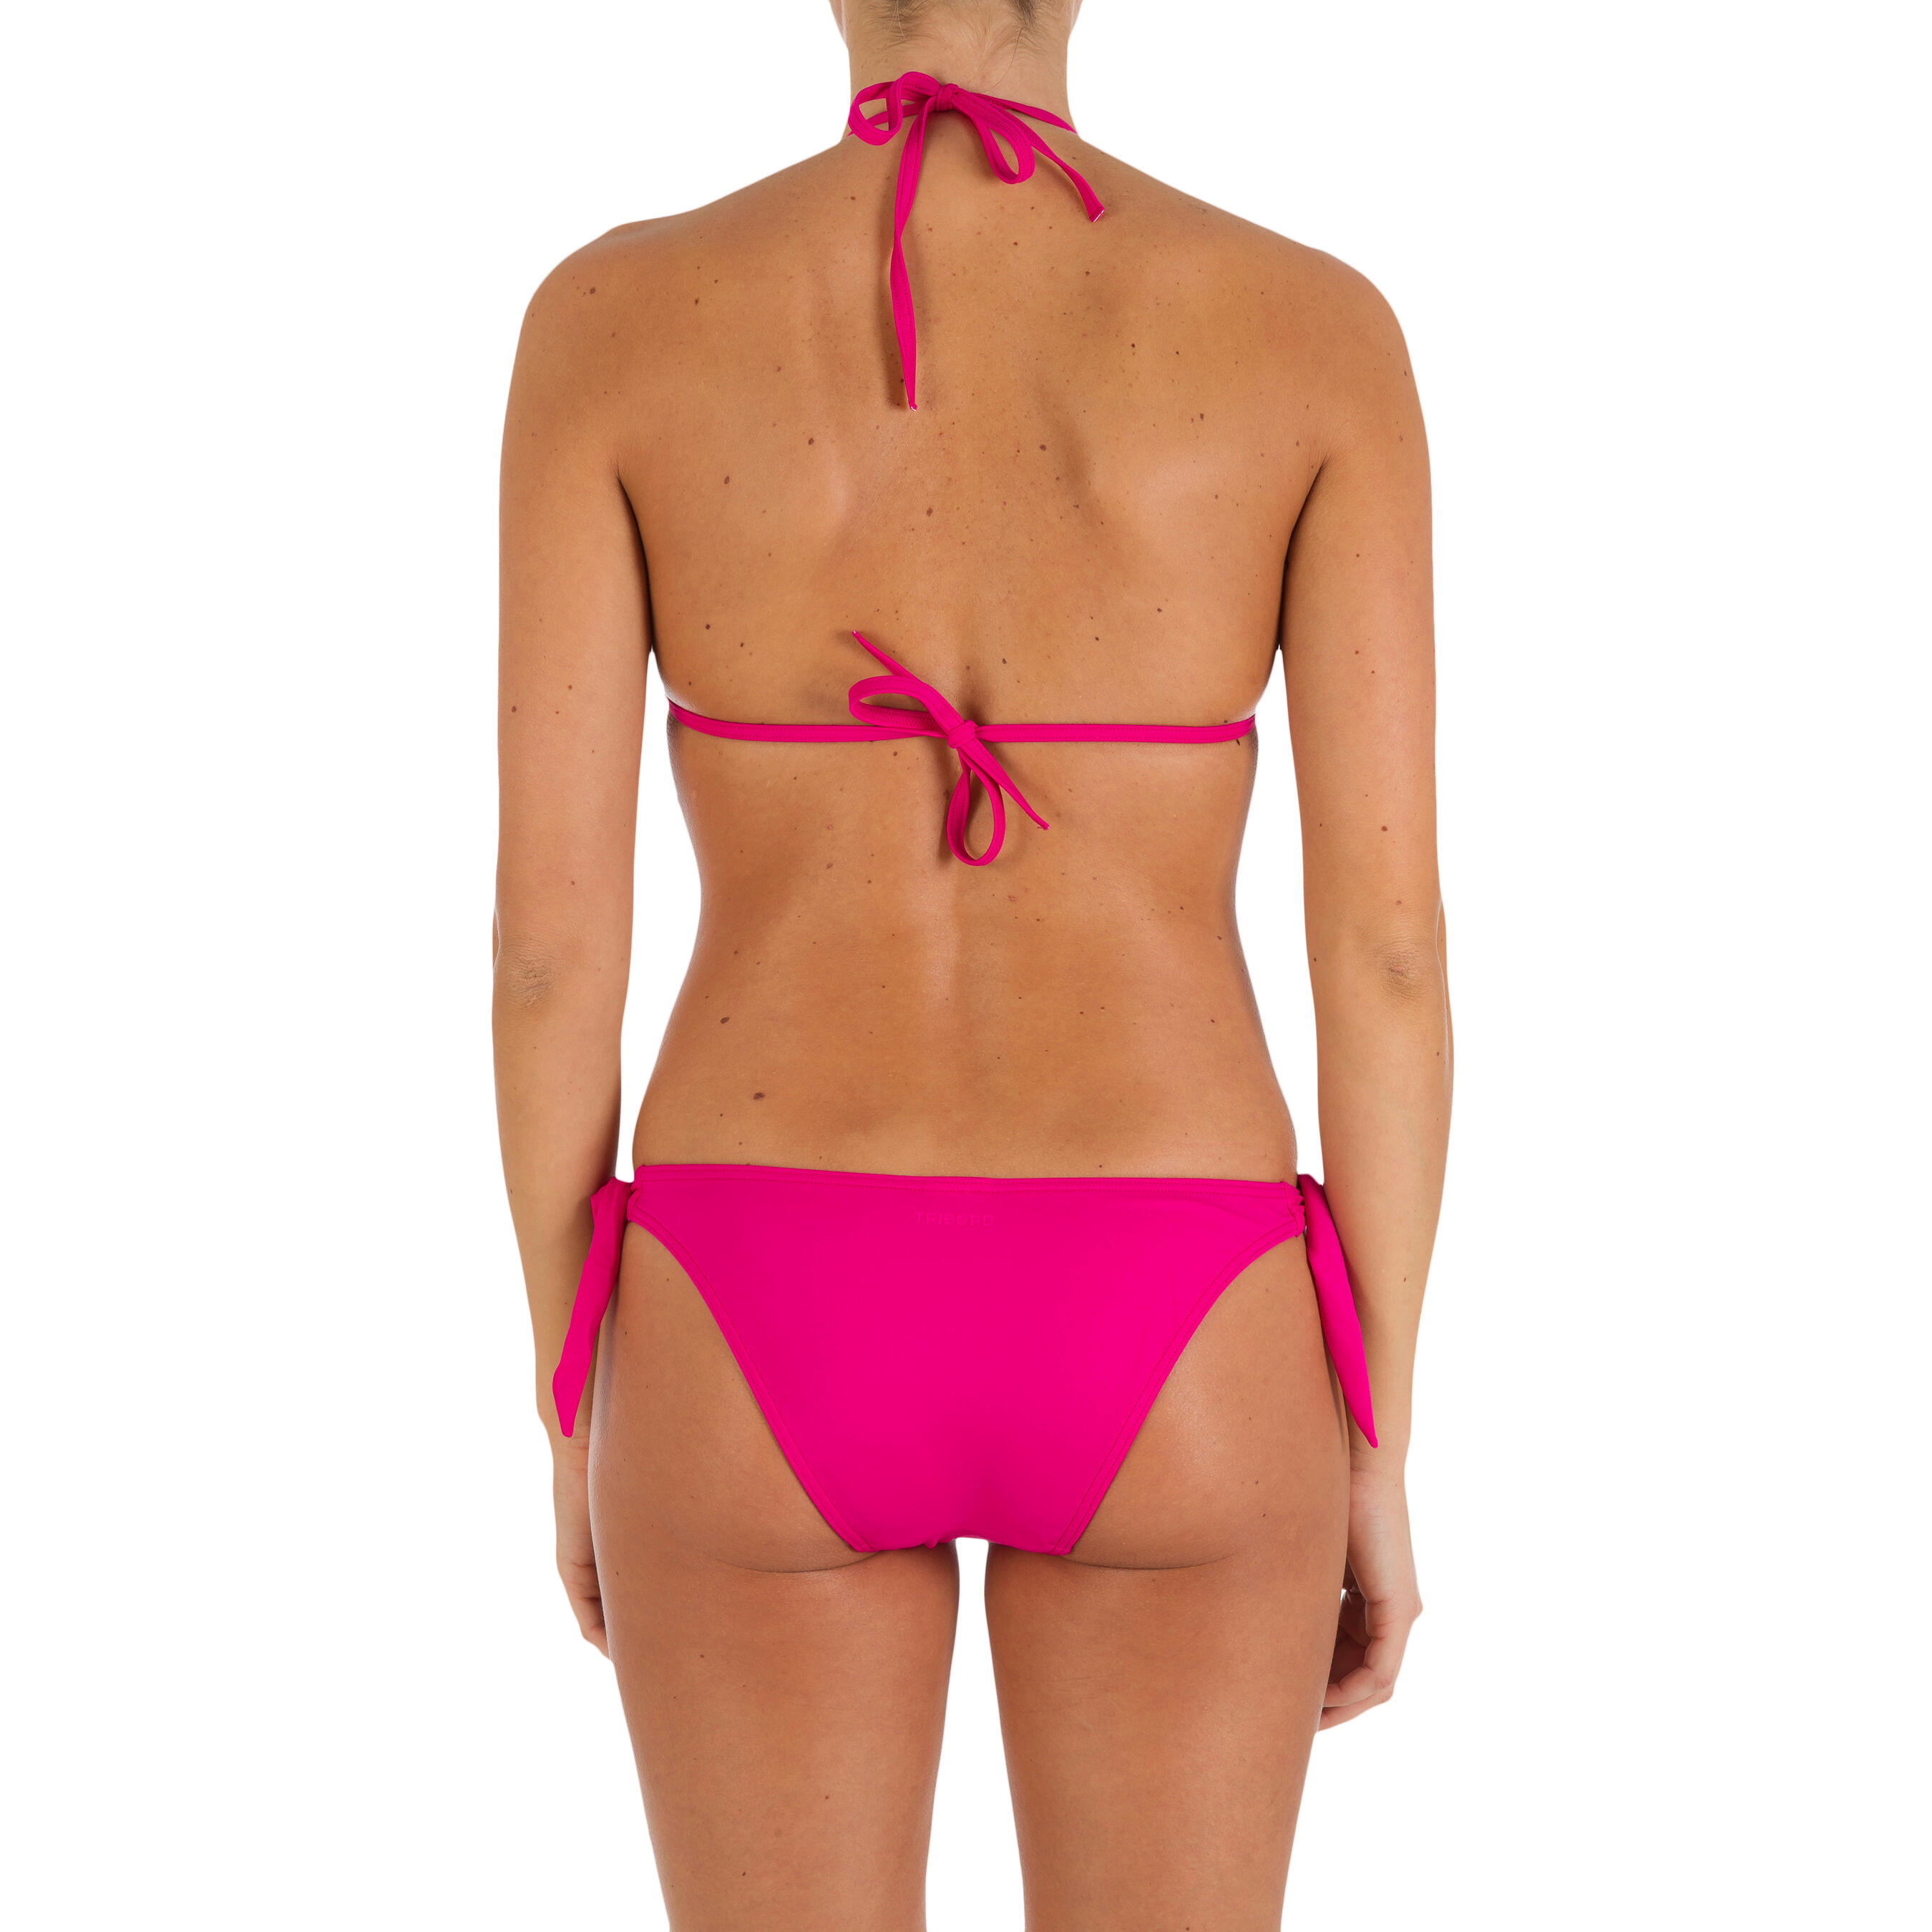 MAE women's triangle swimsuit - Plain pink 9/9